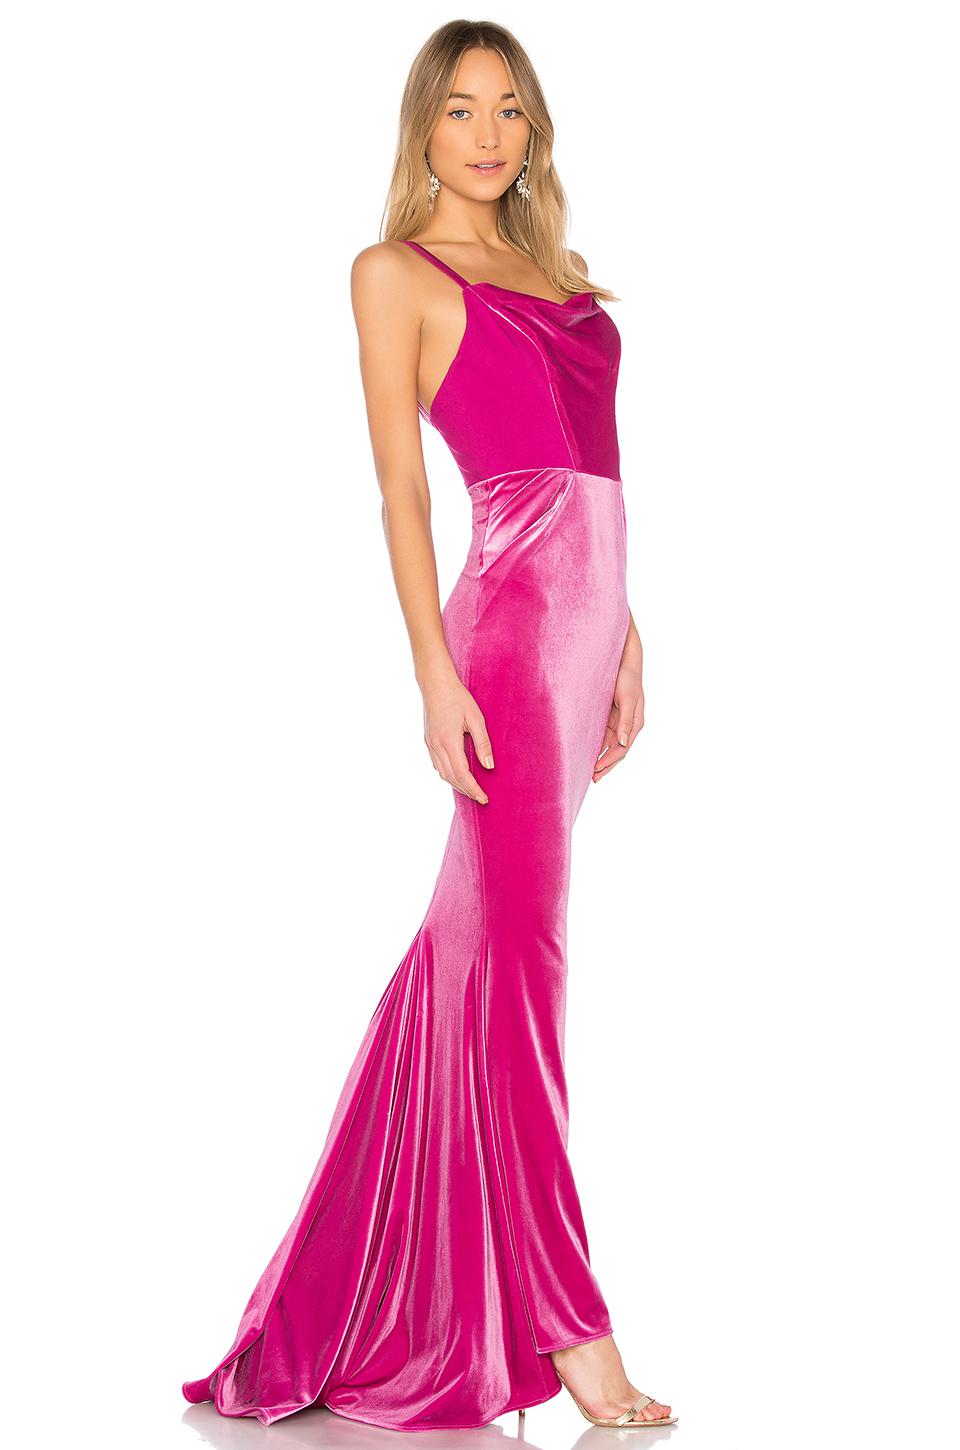 michael costello pink dress